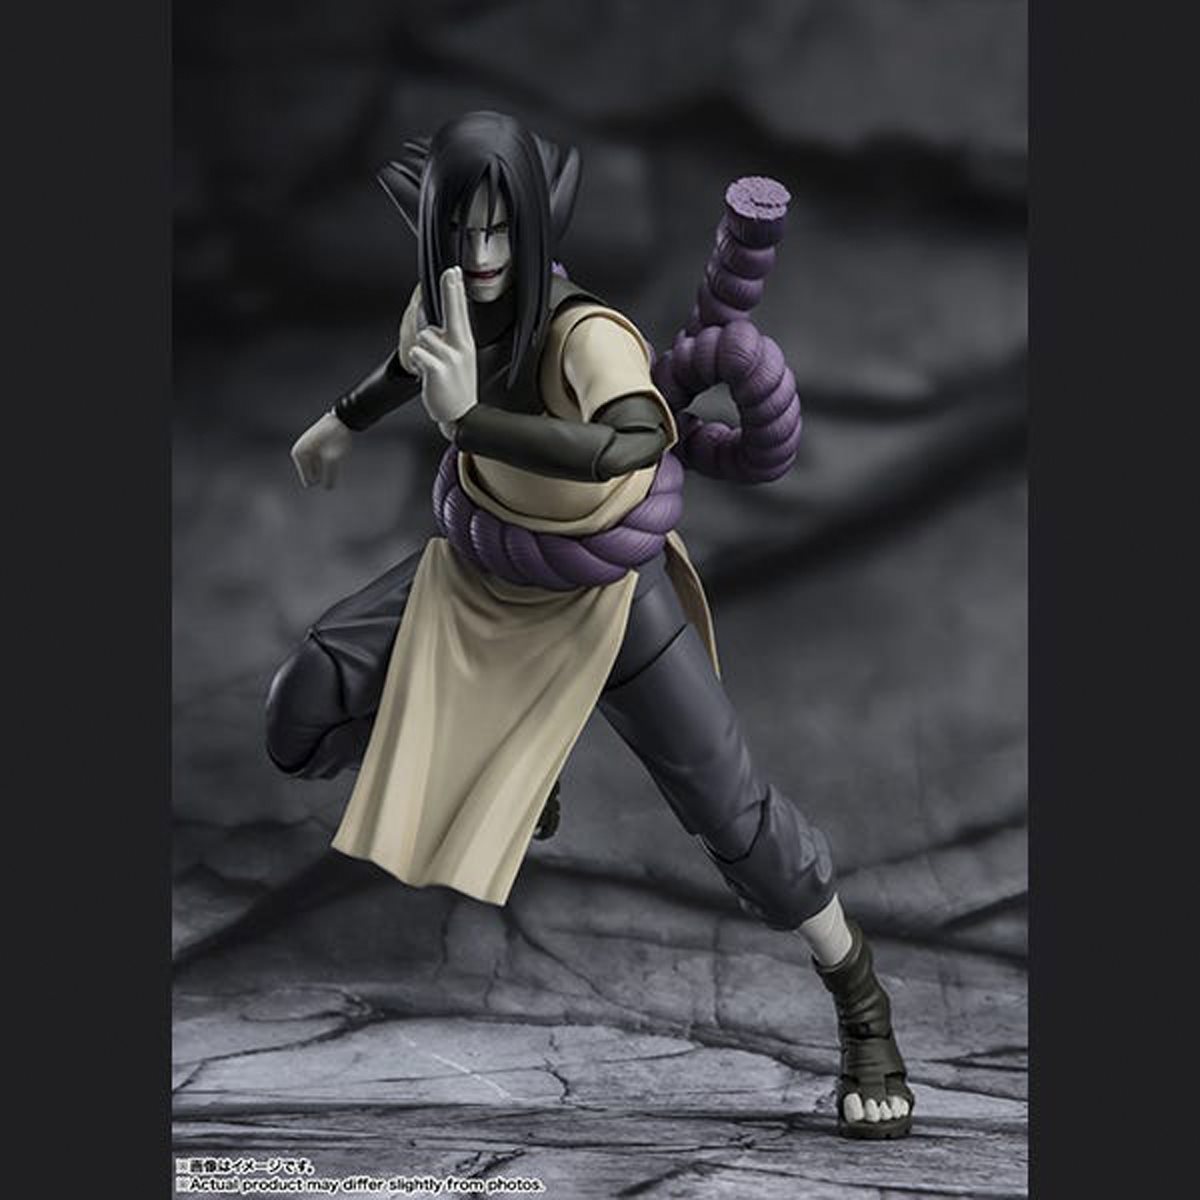 Naruto figurine S.H. Figuarts Orochimaru - Seeker of Immortality Bandai  Tamashii Nations